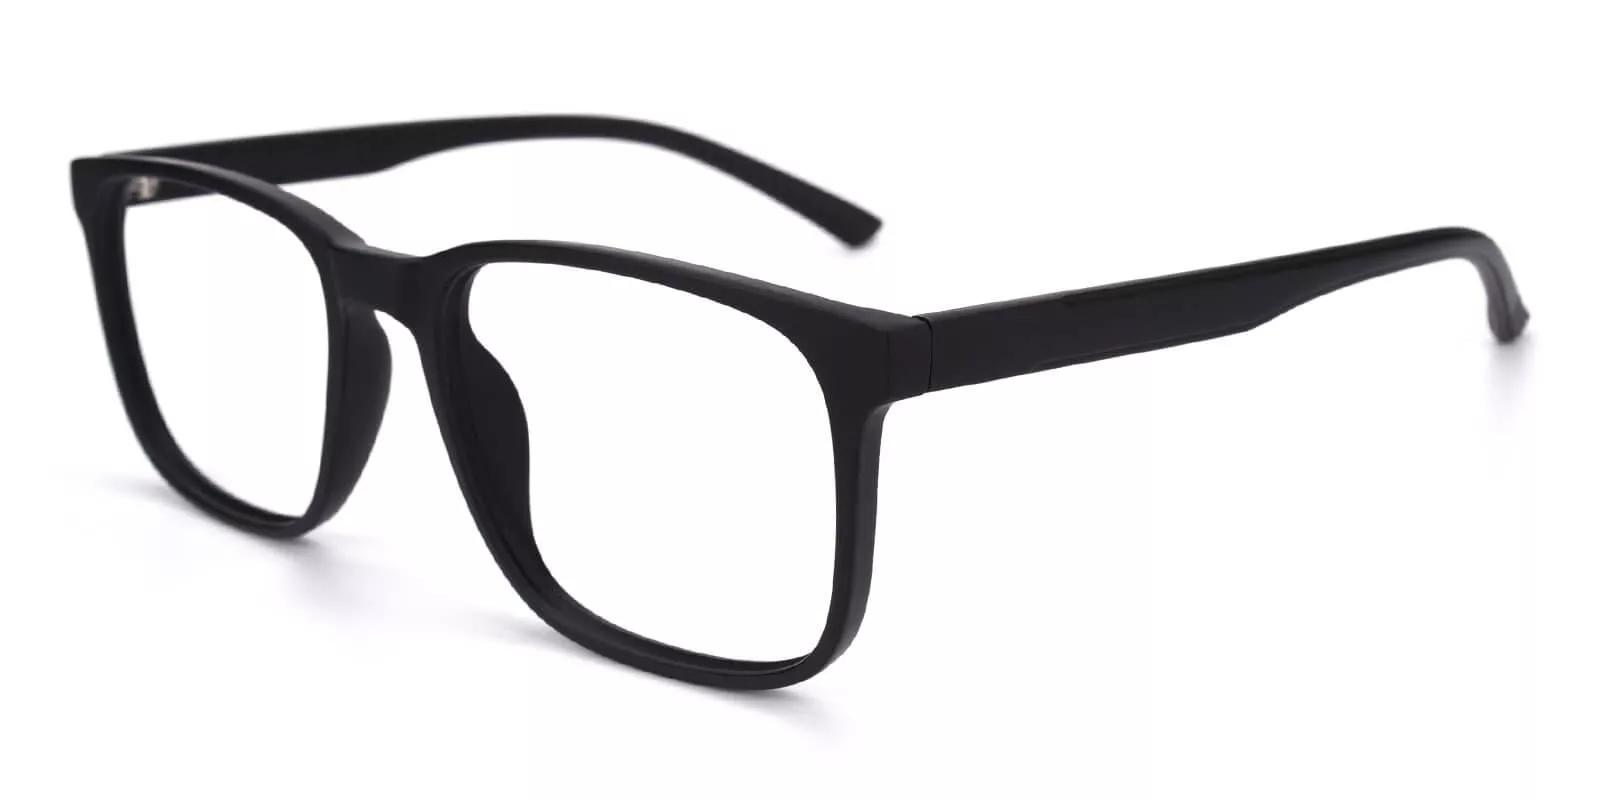 Renton Light Weight Eyeglasses Black